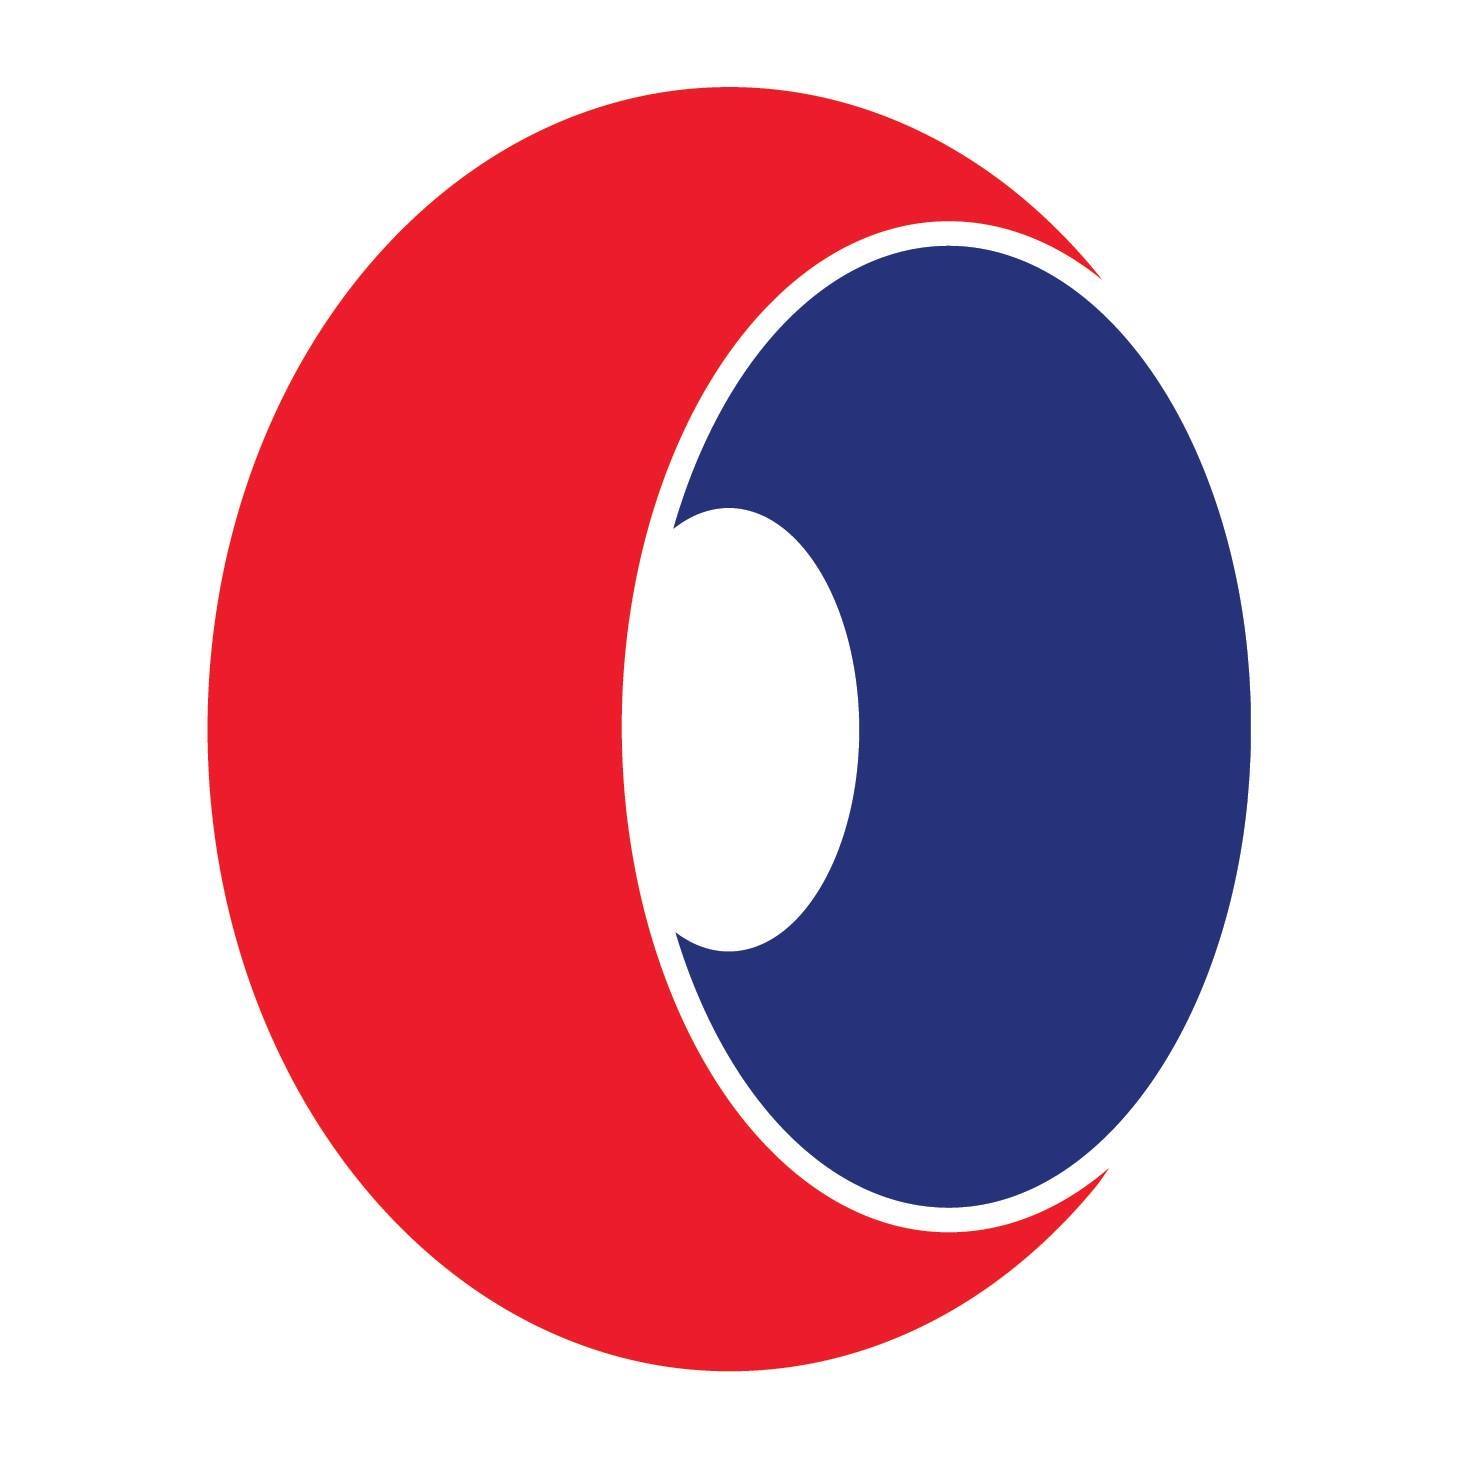 Chandos Construction Ltd logo